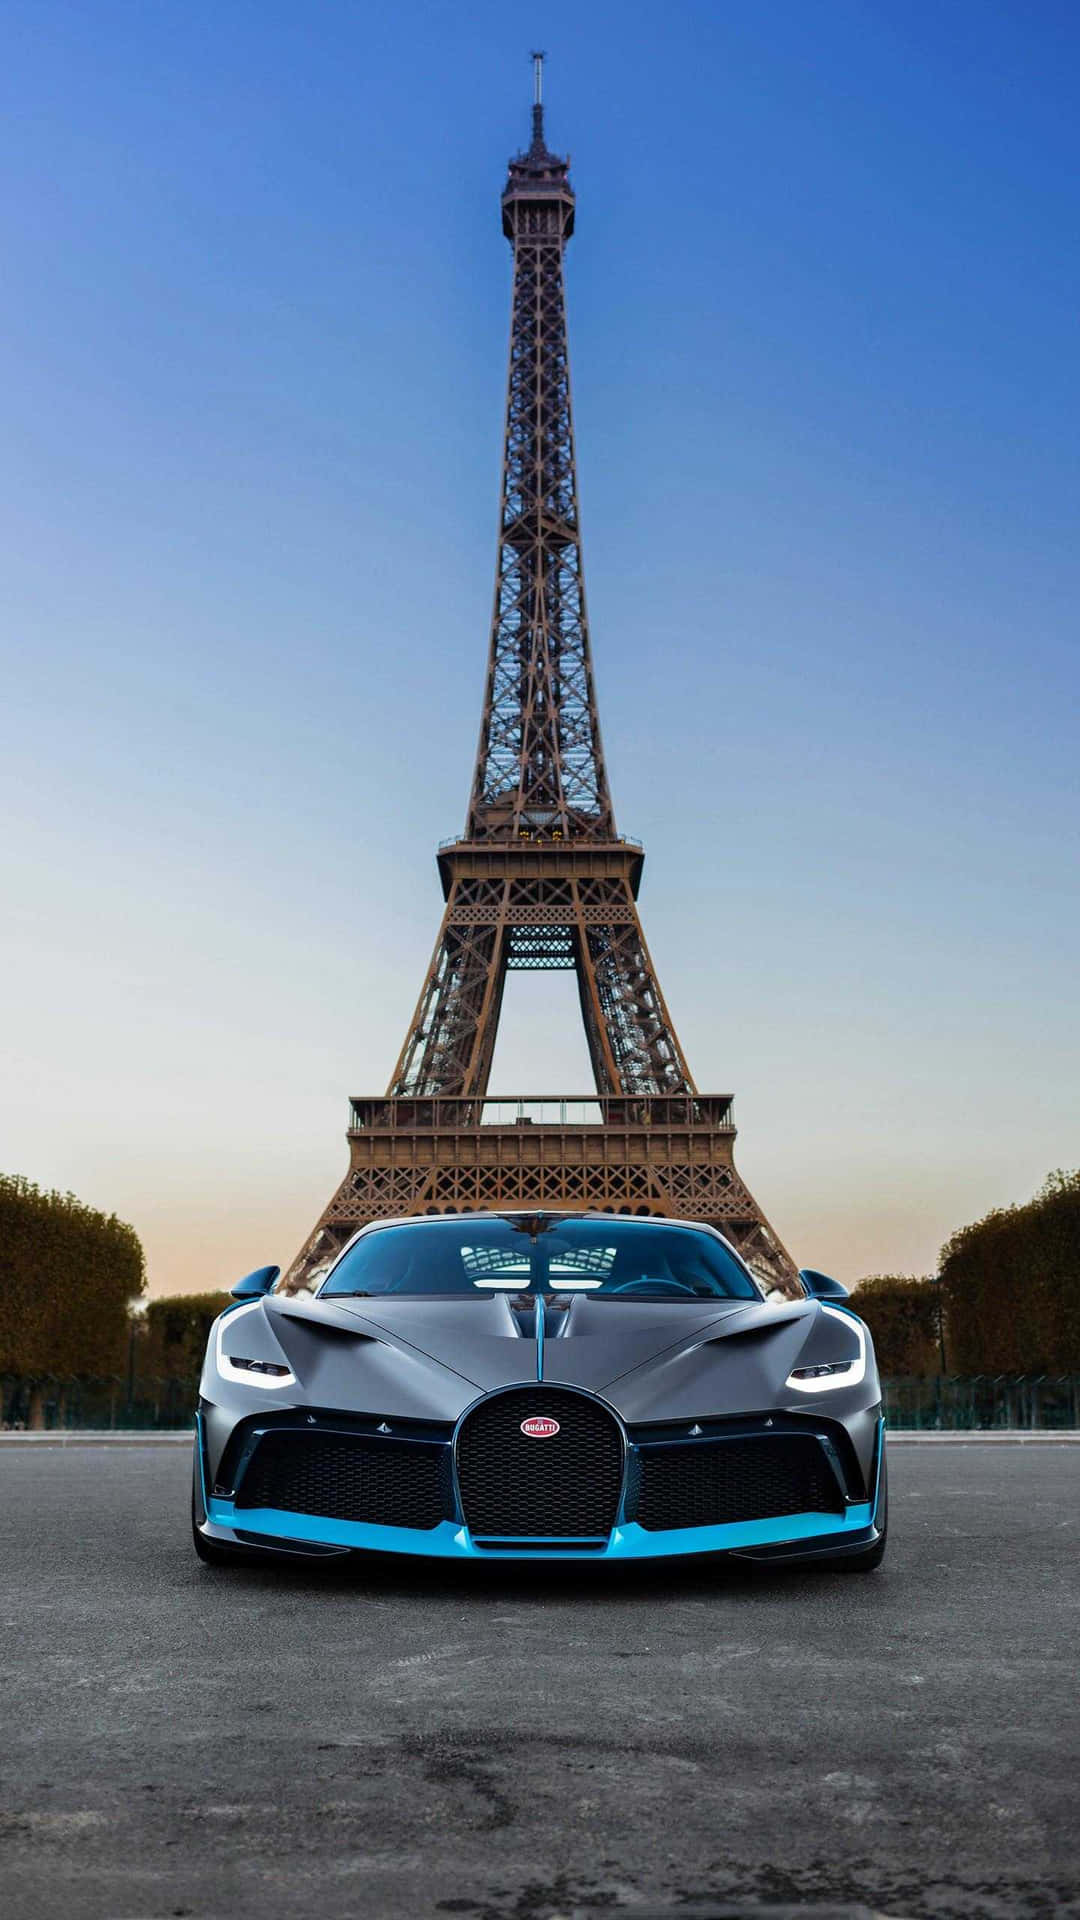 Elencanto Del Mejor Bugatti Fondo de pantalla